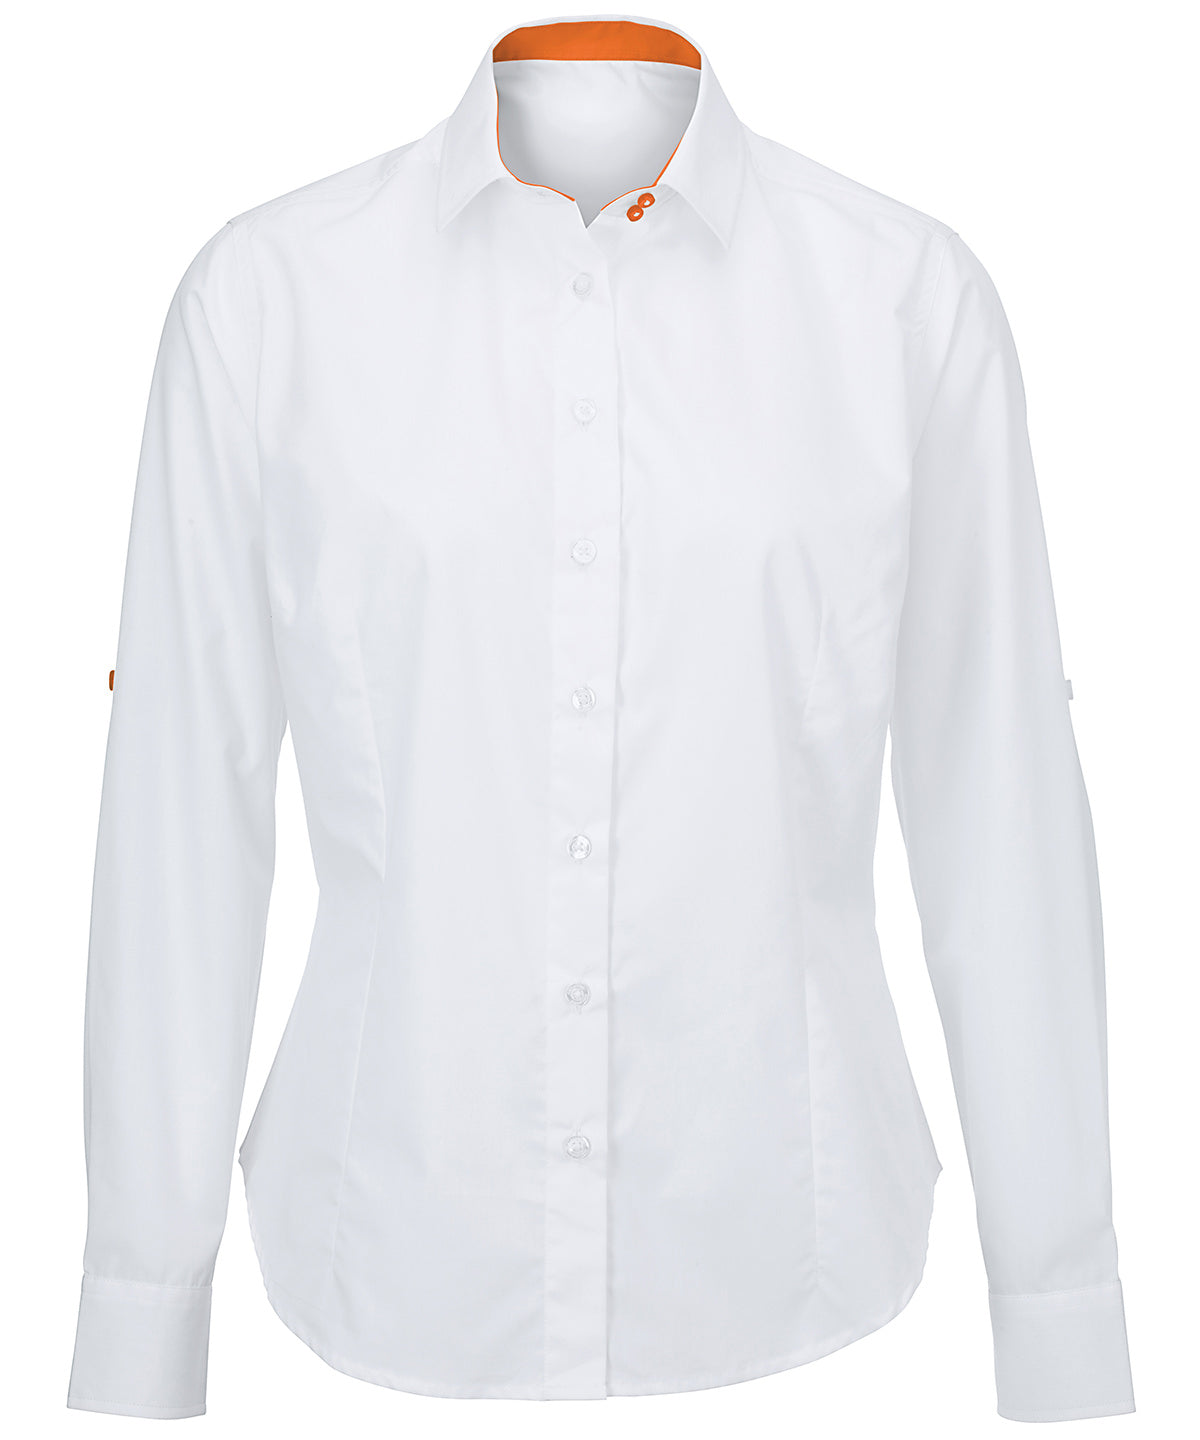 Women's white roll-up sleeve shirt (NF521W)